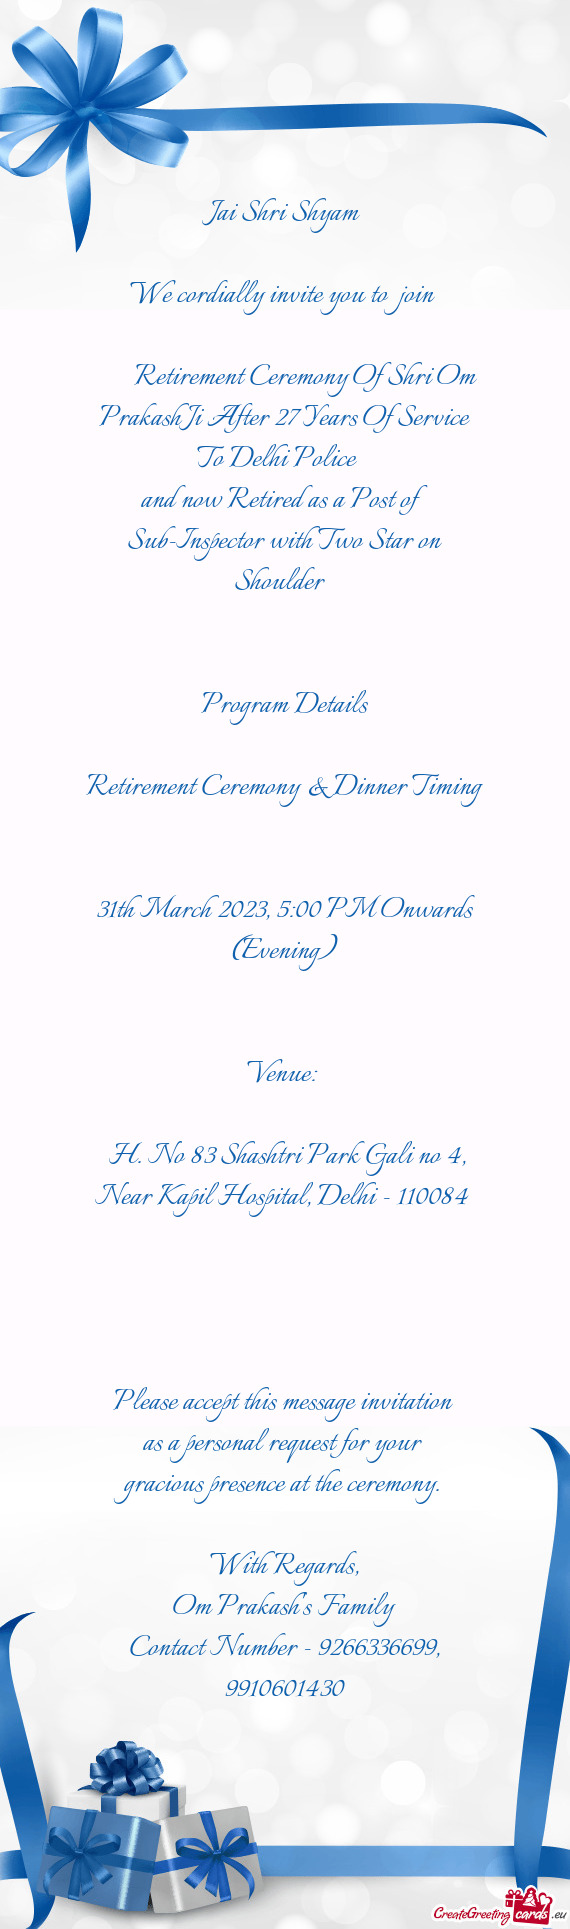 Retirement Ceremony Of Shri Om Prakash Ji After 27 Years Of Service To Delhi Police